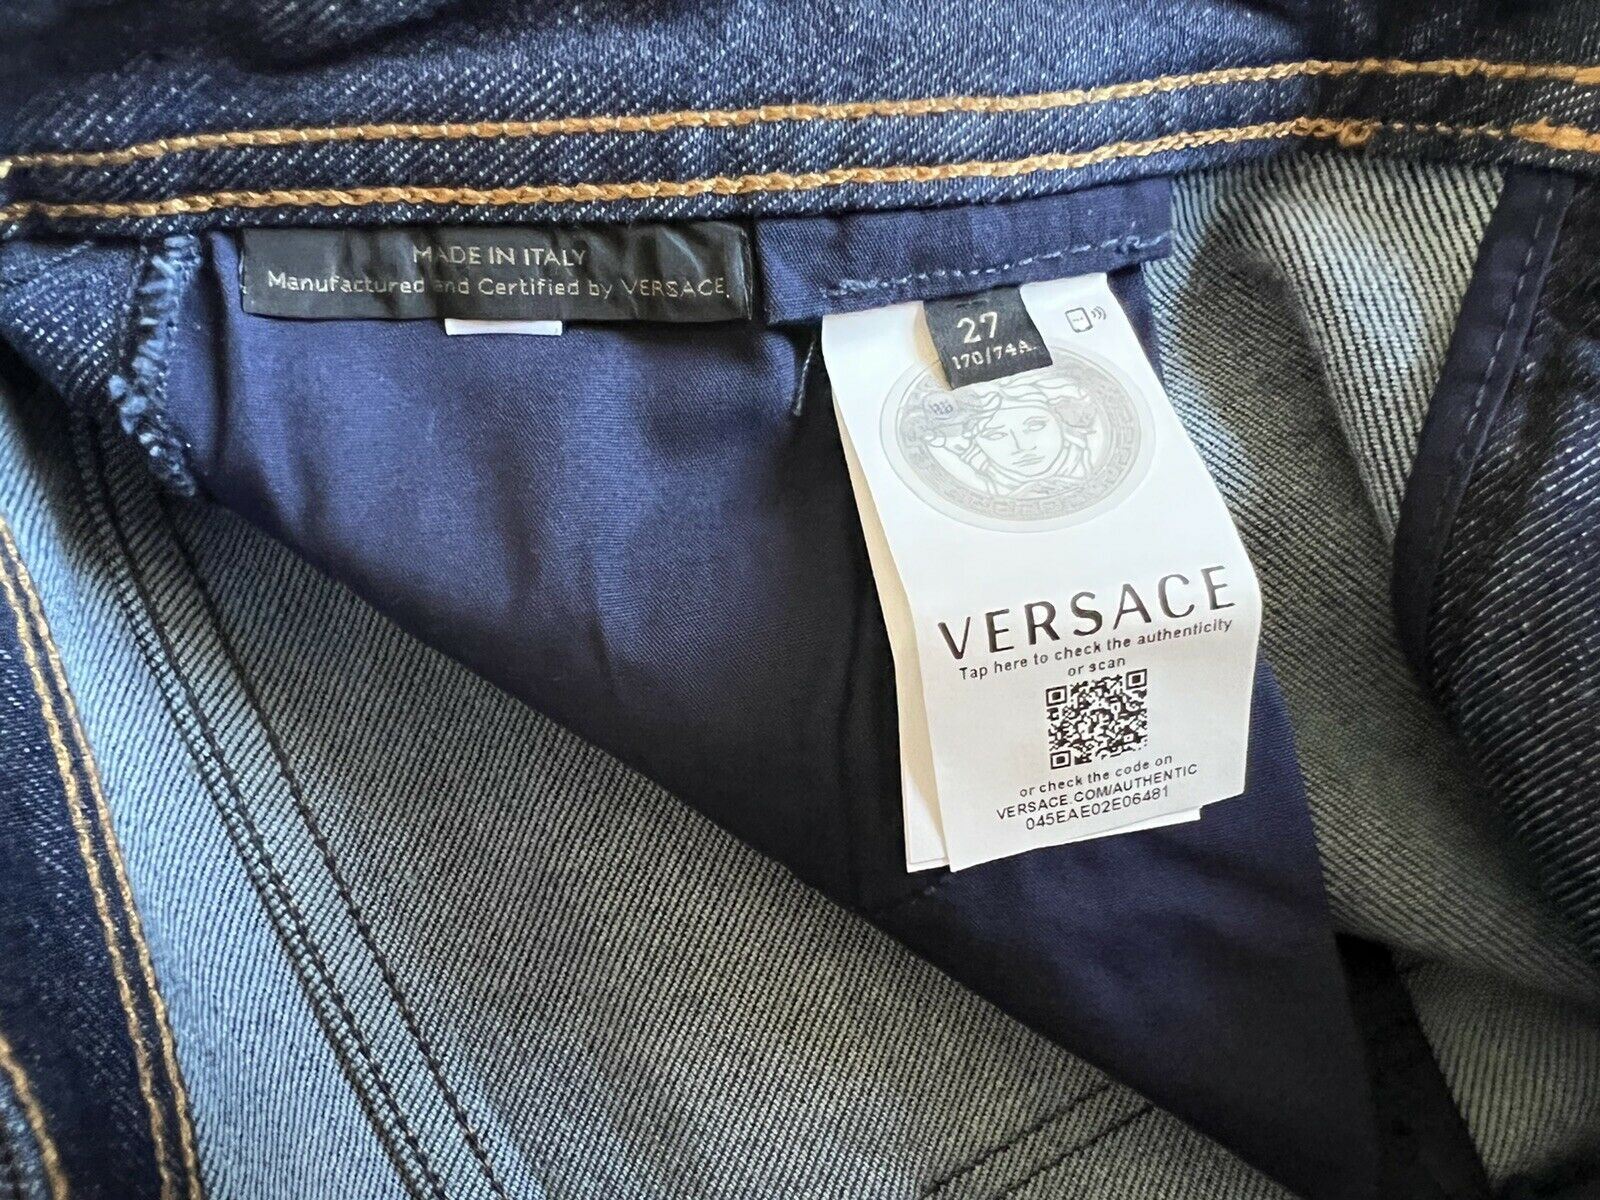 NWT $1175 Versace Studded Women's Denim Dark Blue Jeans Size 27 US Italy